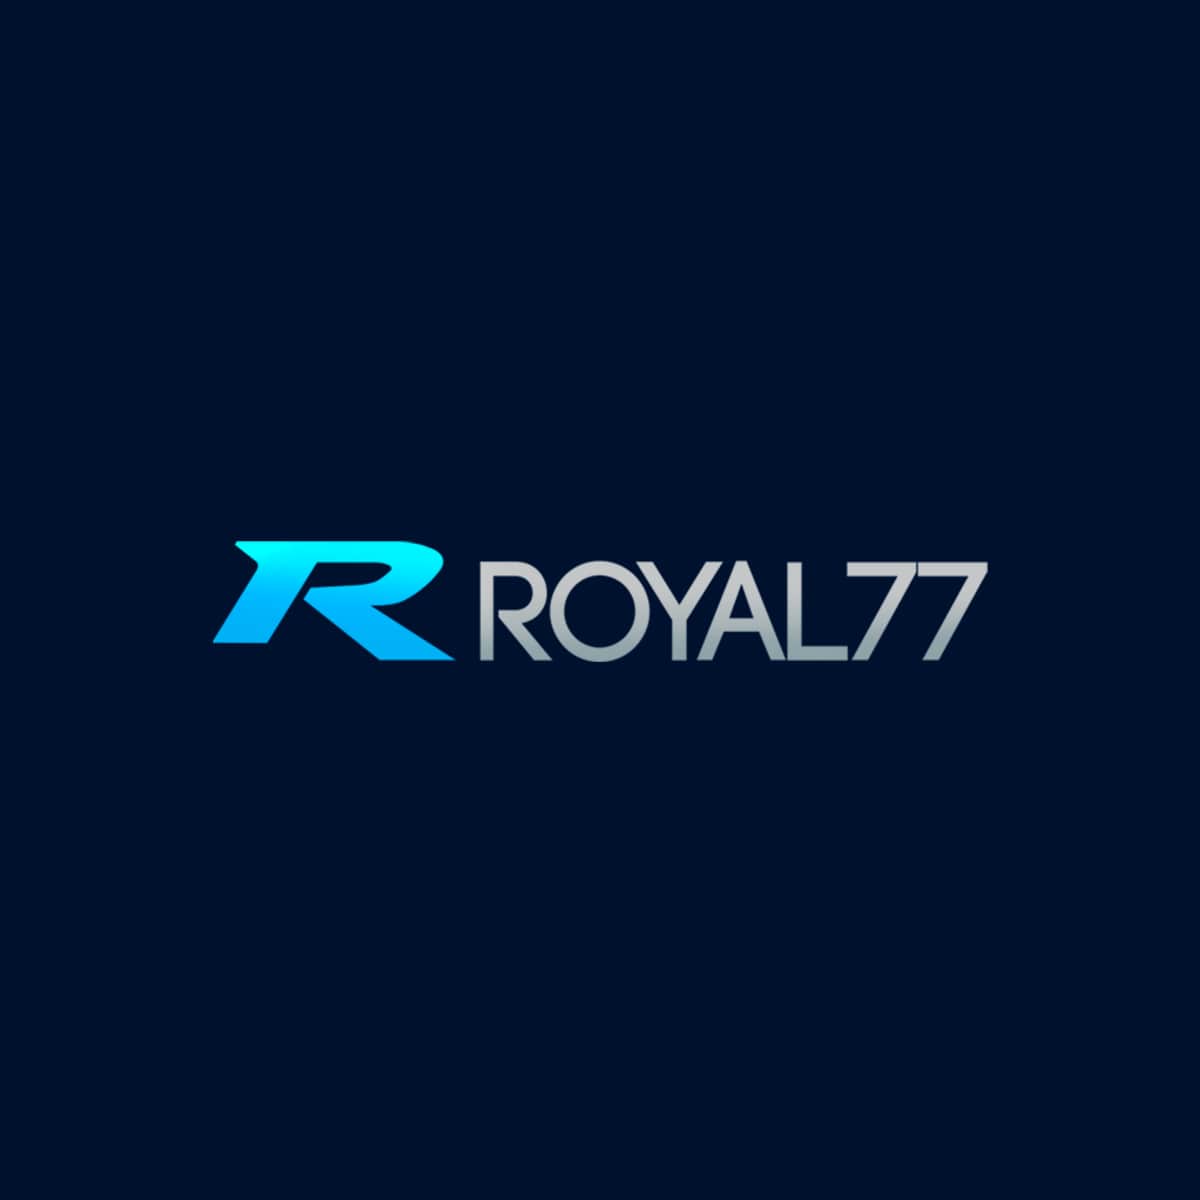 Royal77 Online Casino Malaysia Logo